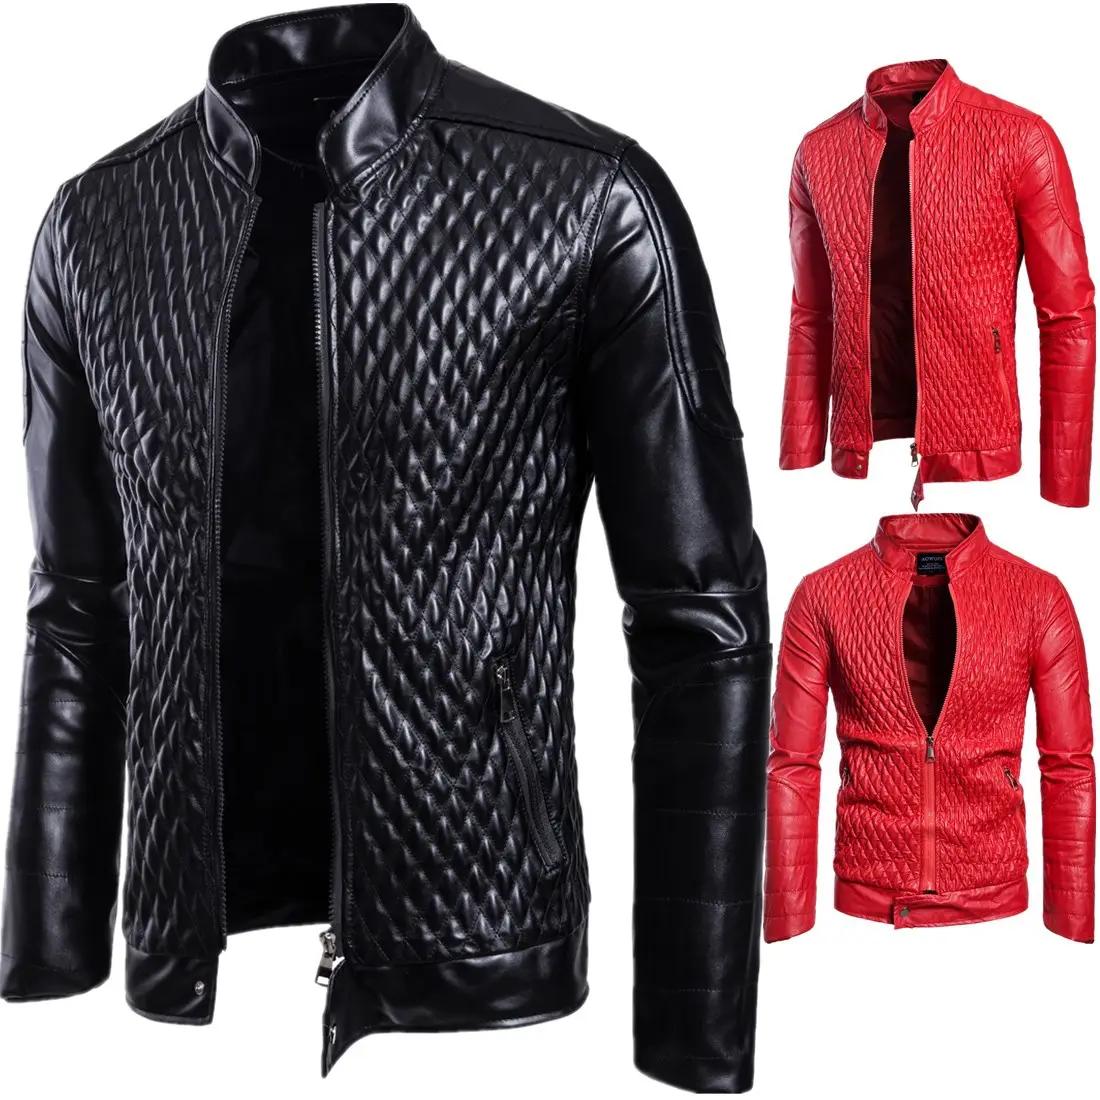 Alephan New men's leather coat autumn American coats black color plus size men leather jacket with metal zipper